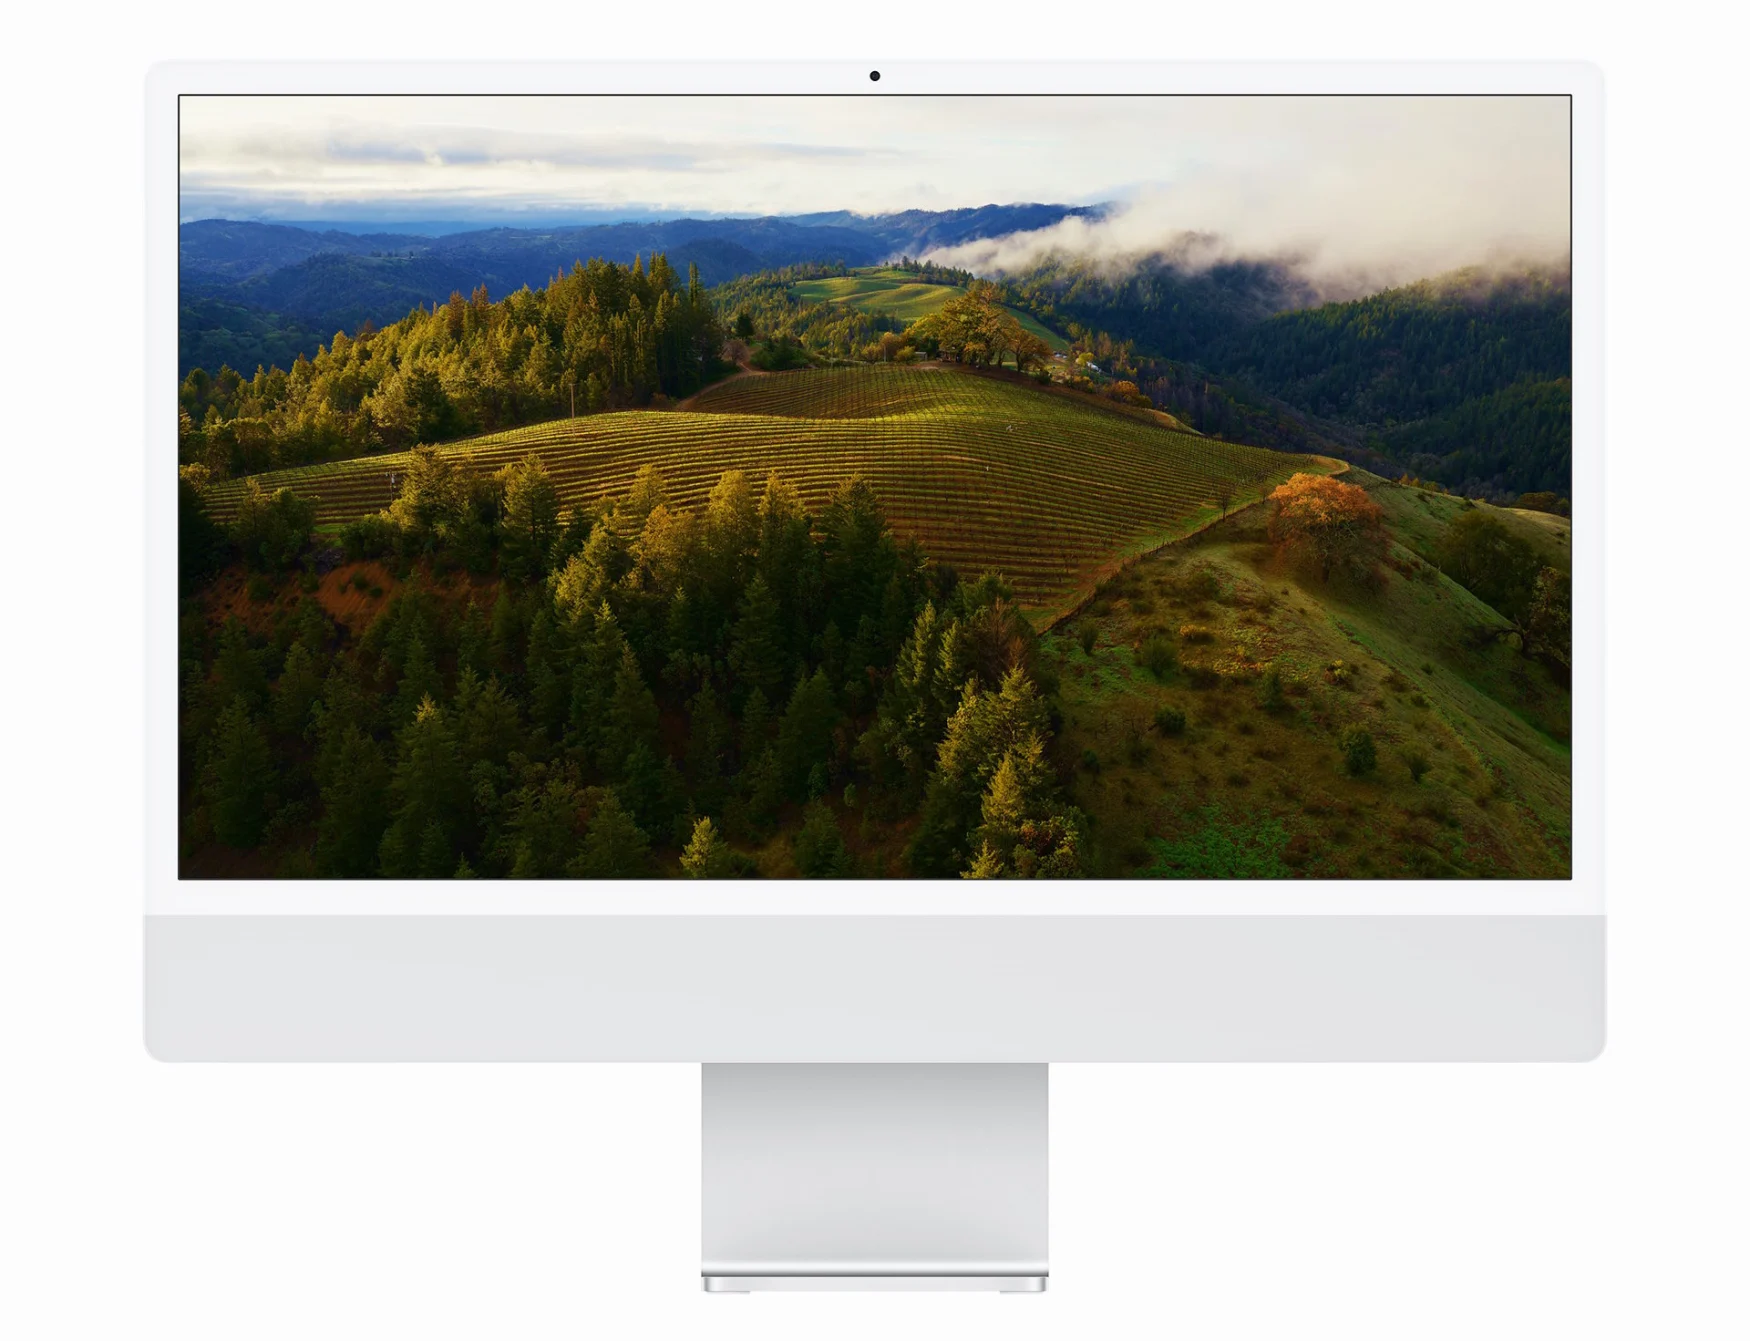 macOS Sonoma wallpaper on an iMac